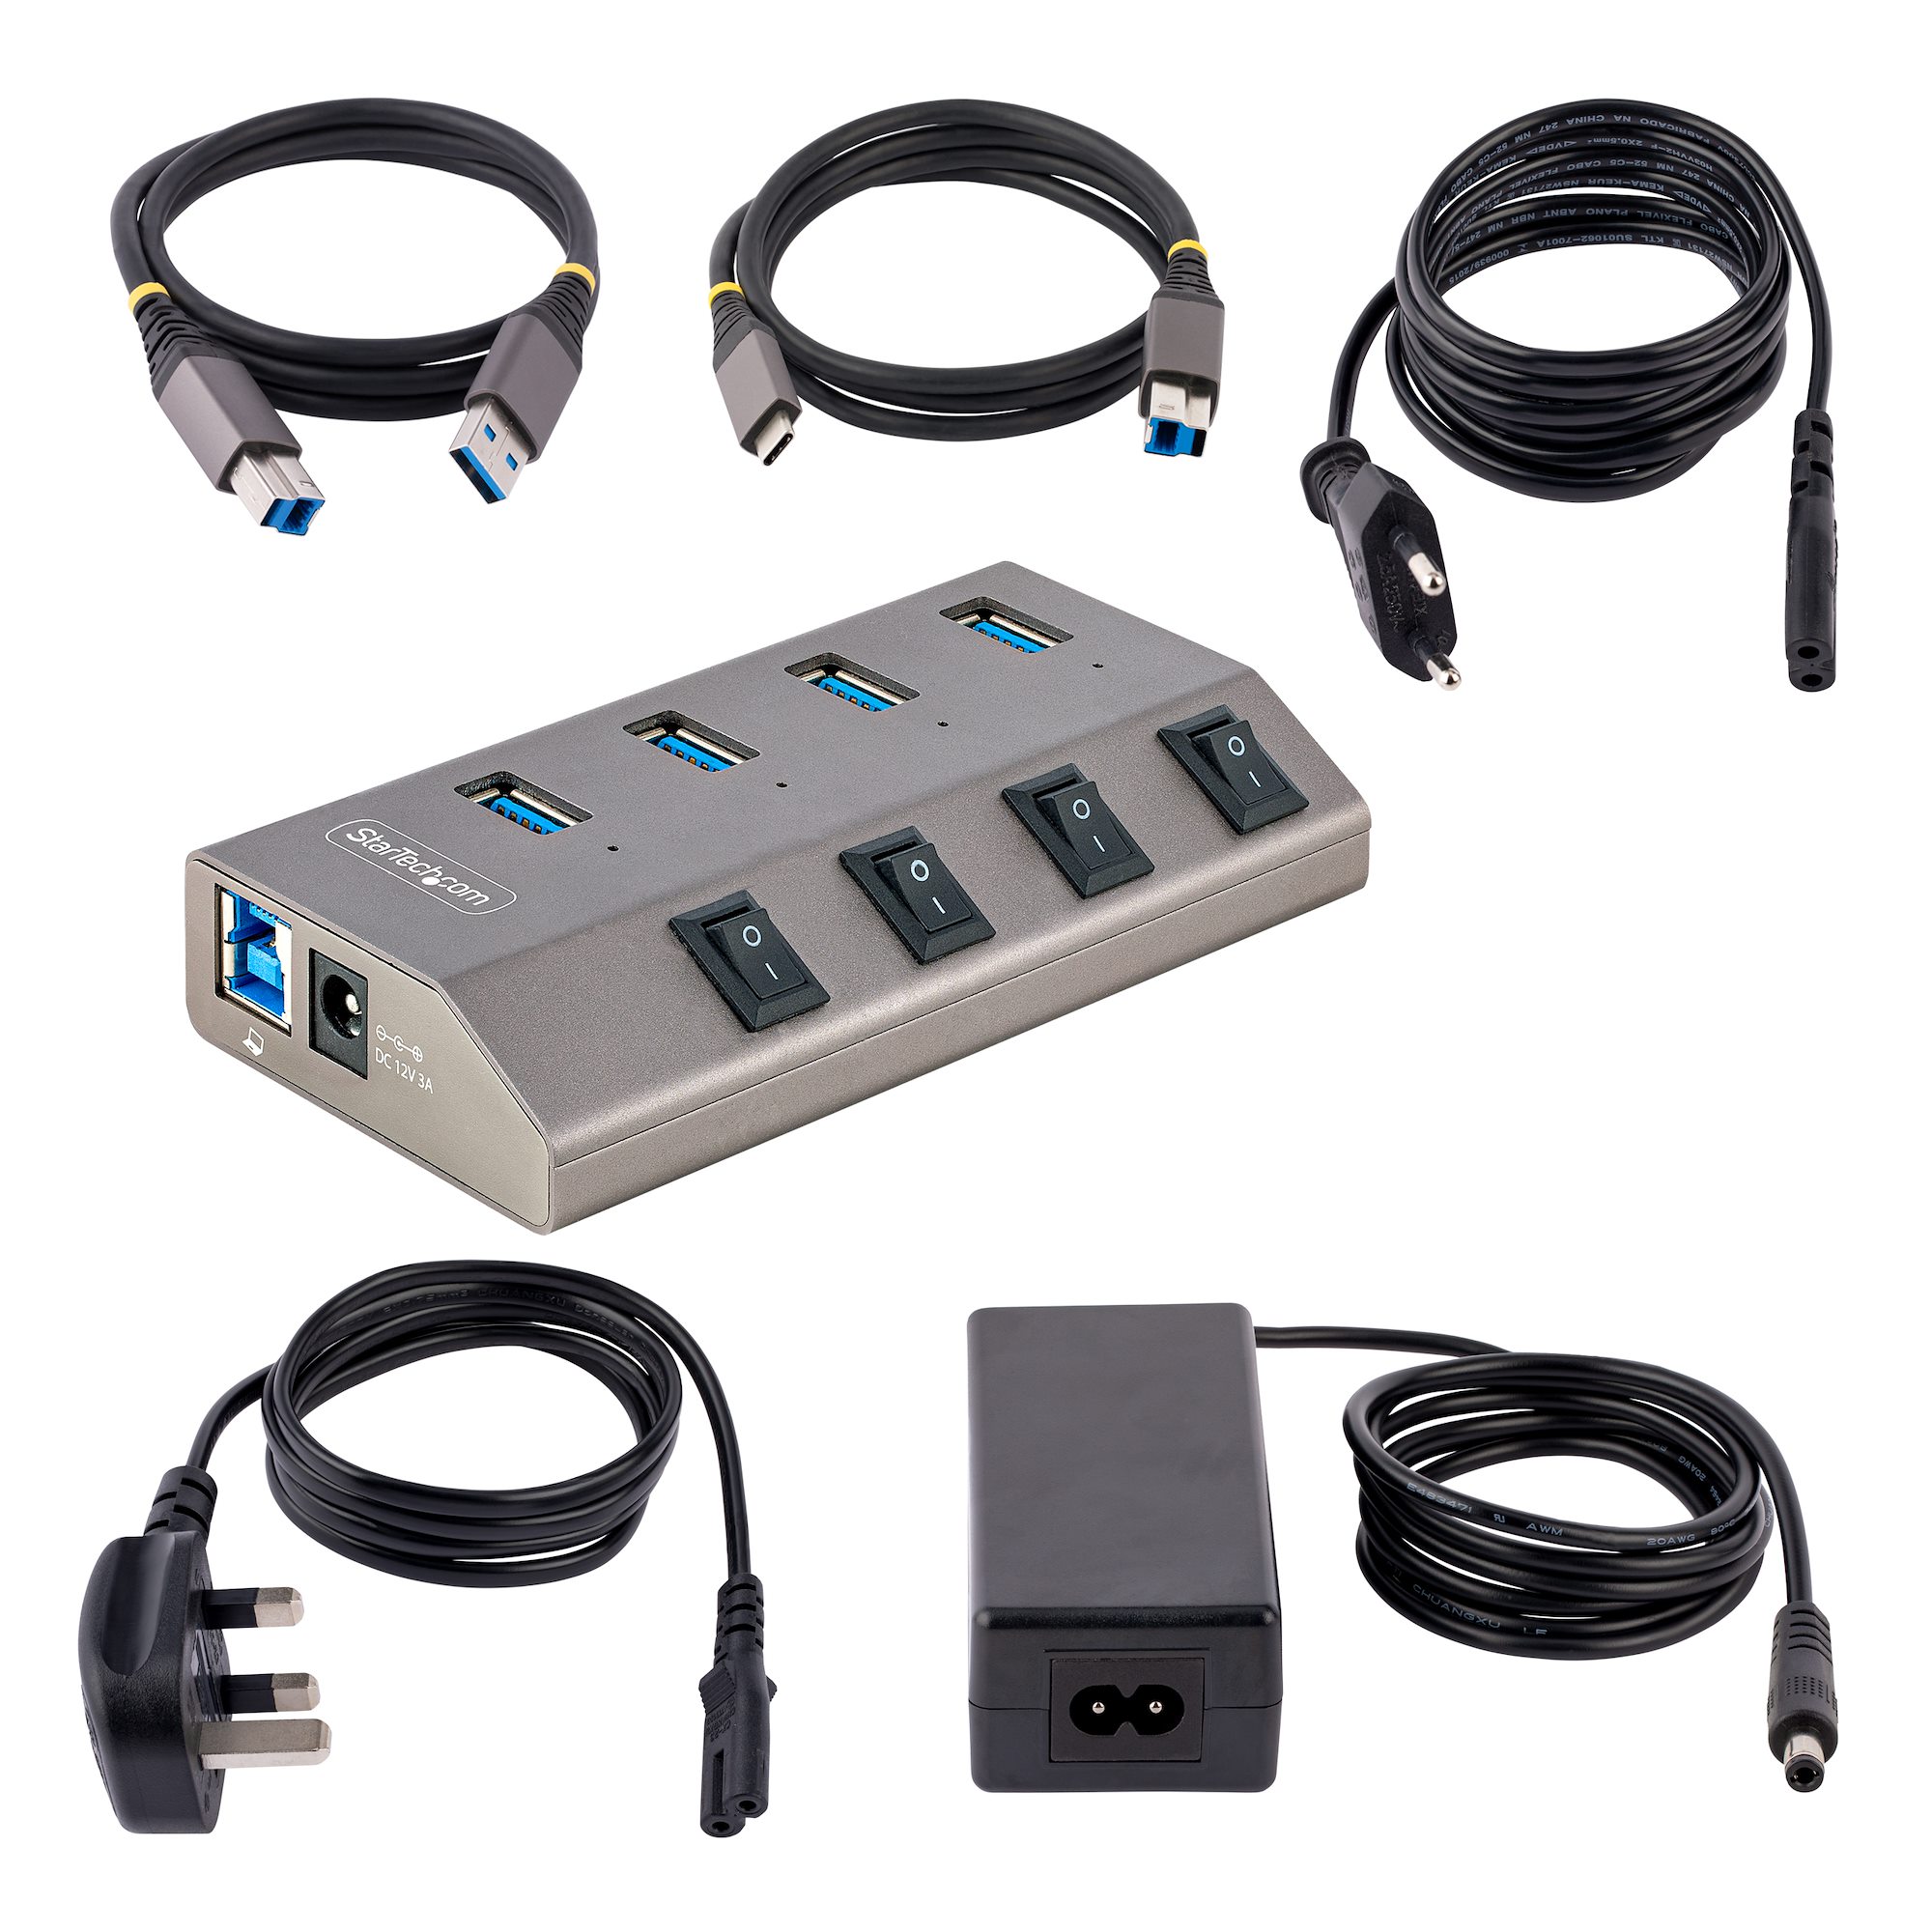 StarTech.com Hub Concentrador USB 3.0 (5Gbps) de 4 Puertos - Ladrón USB-C a  4x USB A - Alimentado por el Bus en